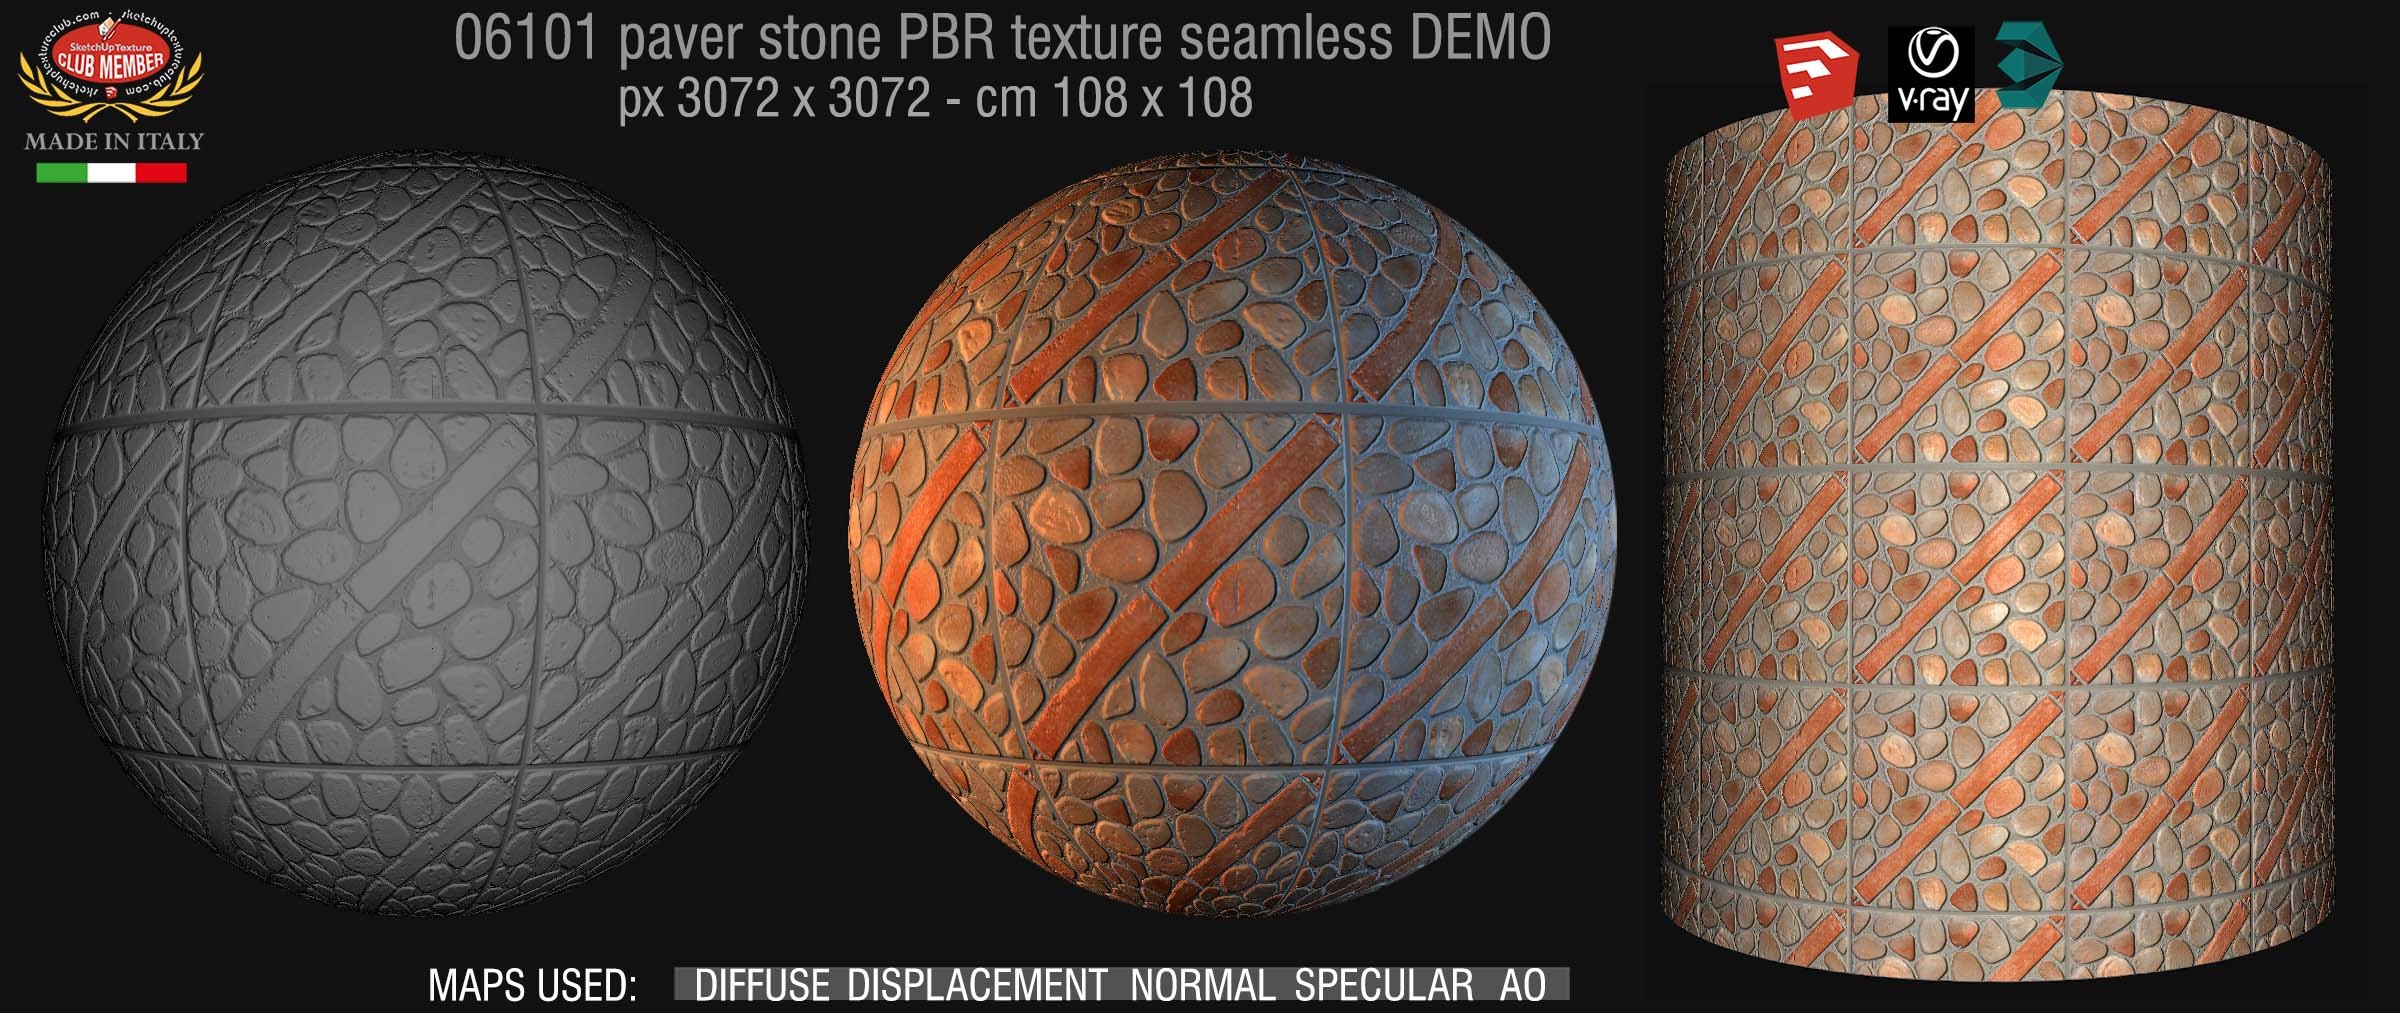 06101 paver stone PBR texture seamless DEMO